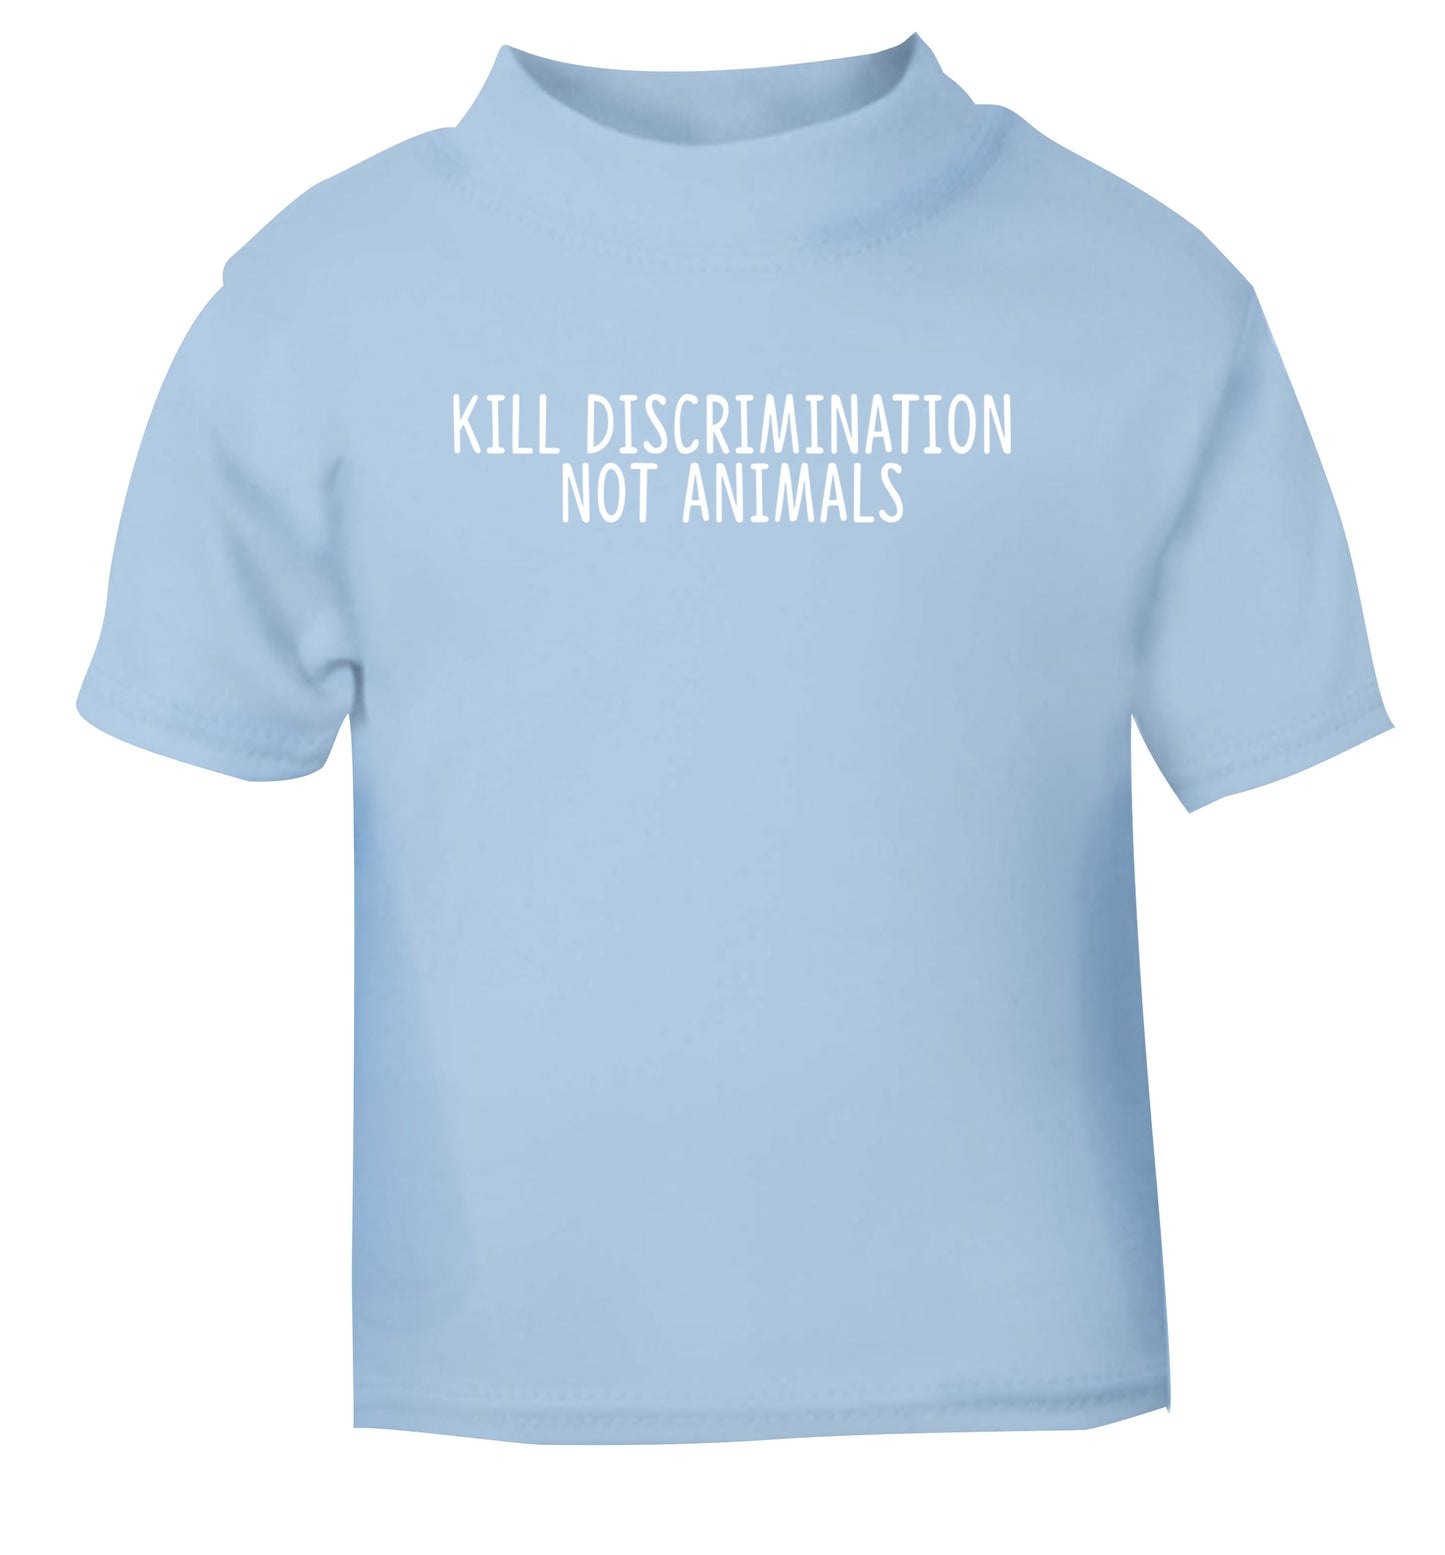 Kill Discrimination Not Animals light blue Baby Toddler Tshirt 2 Years